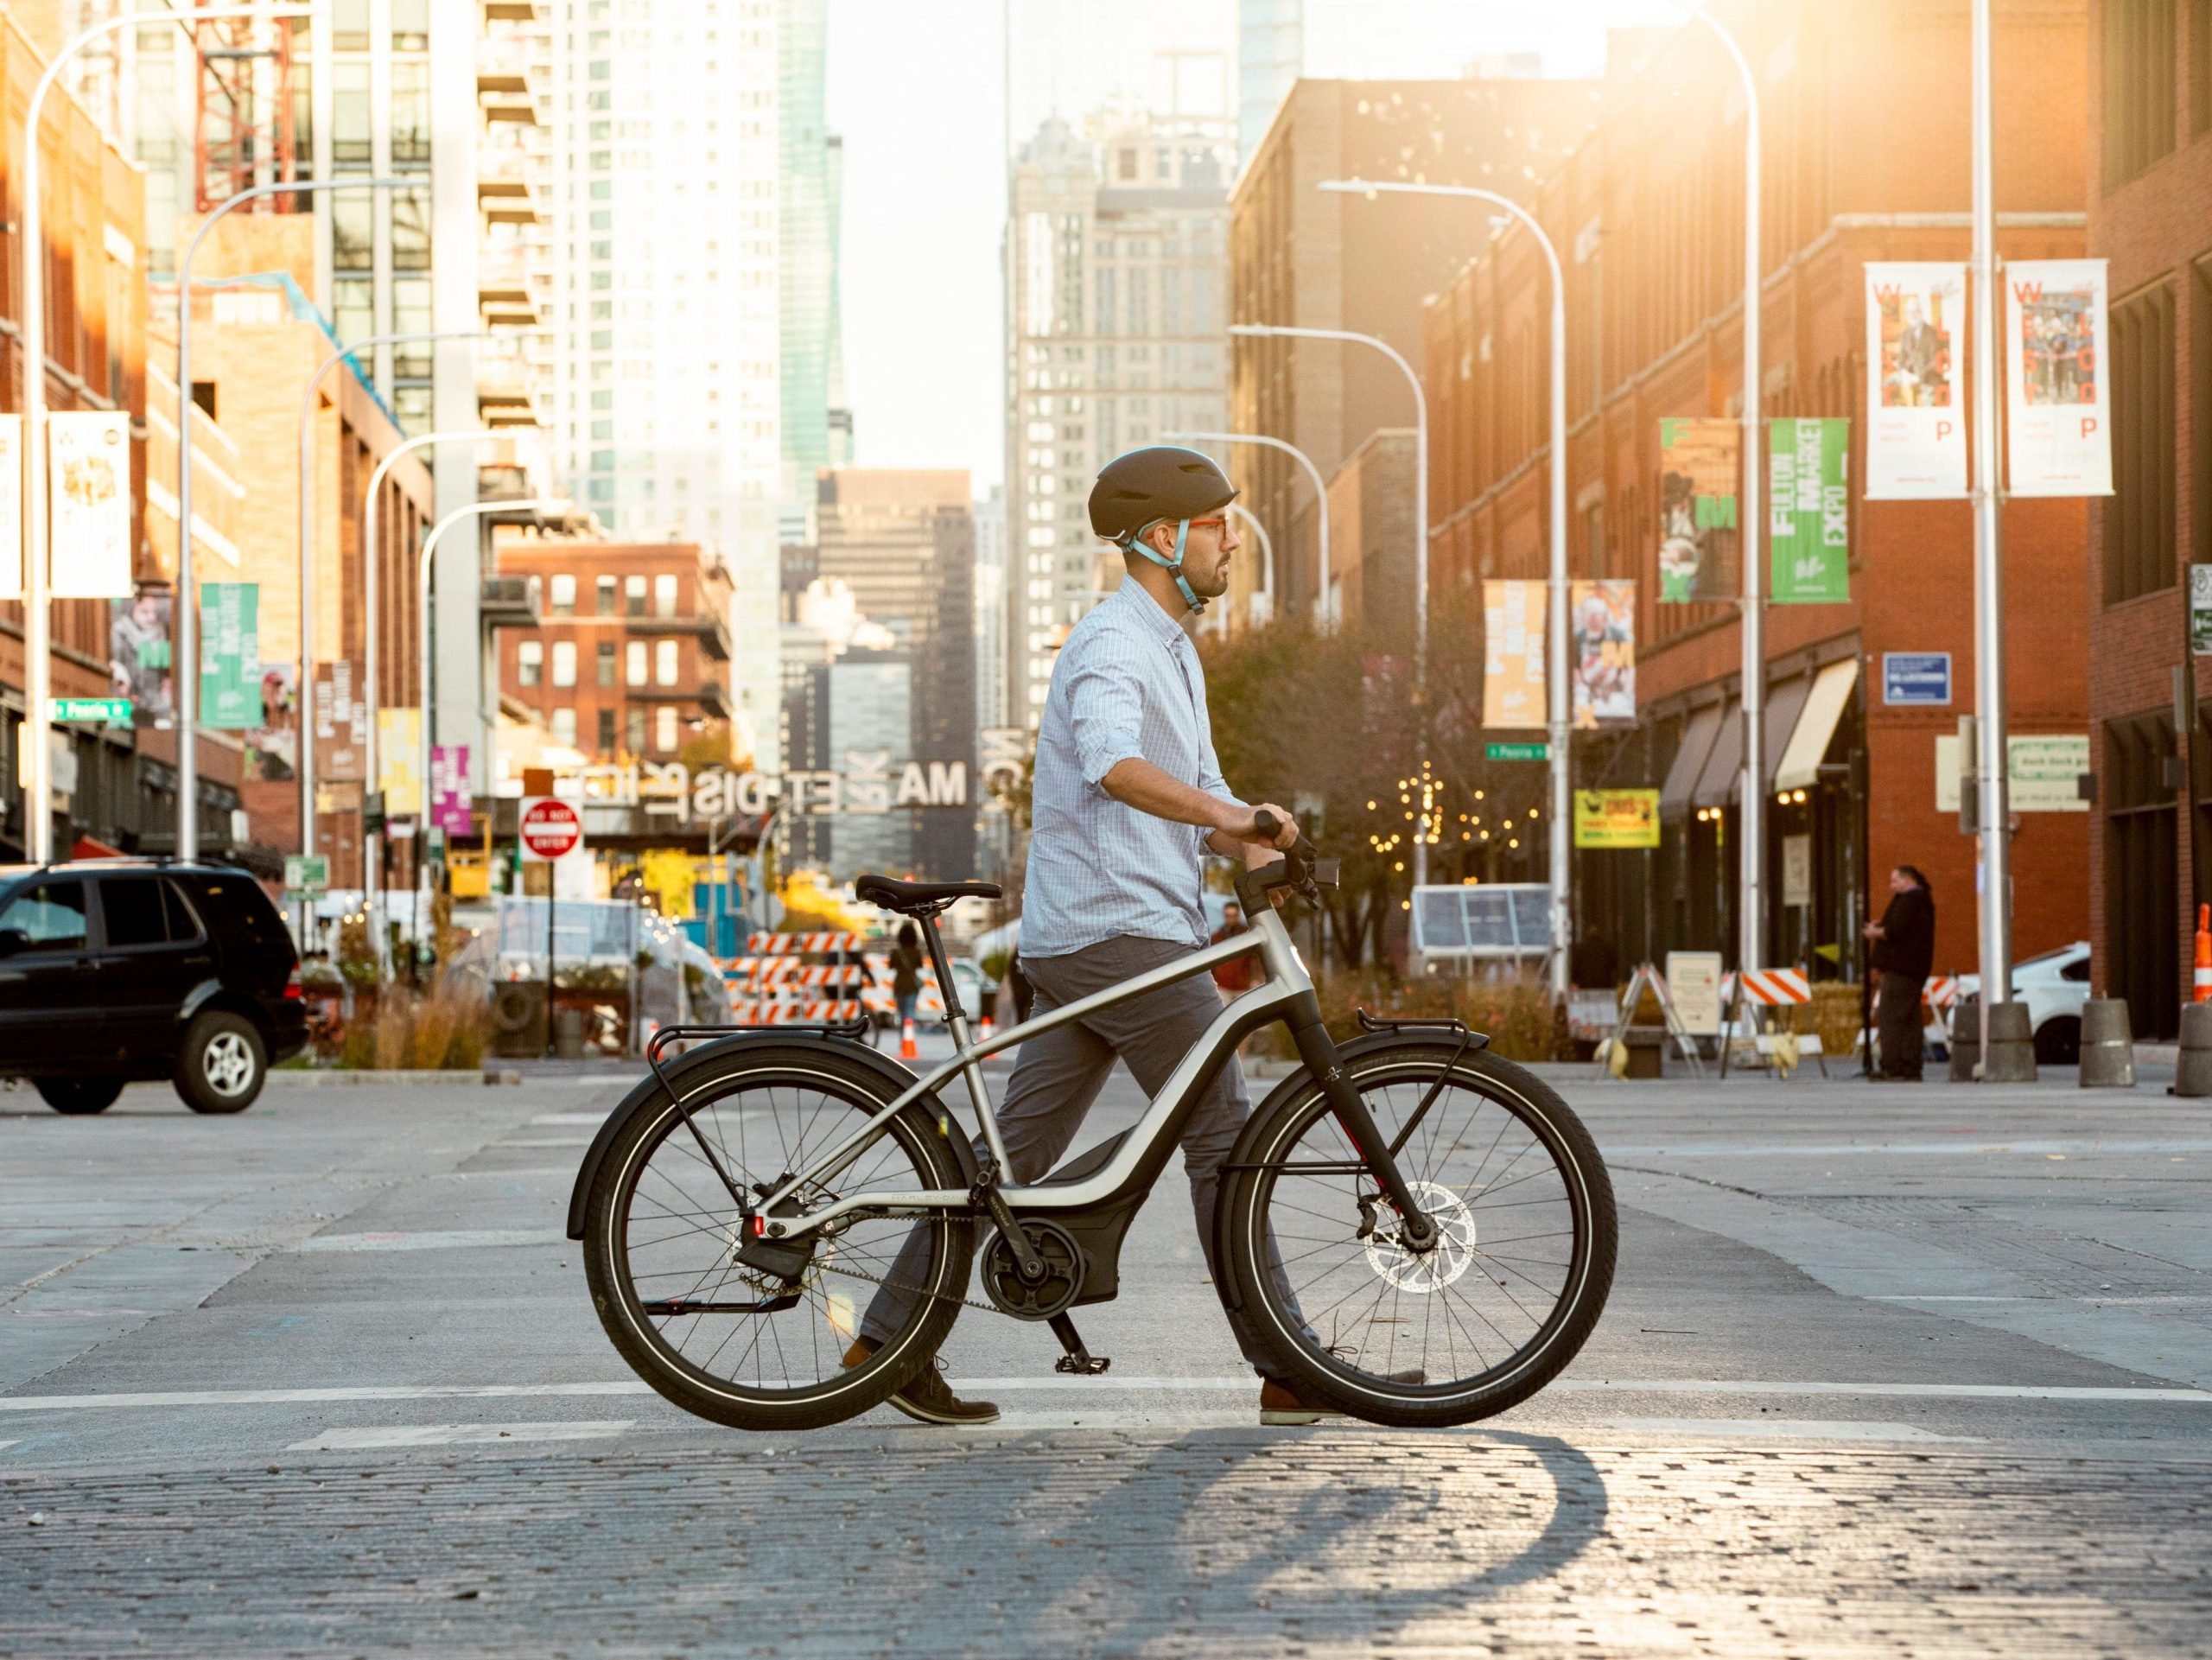 A man walks a Serial 1 electric bike across a street. He is wearing a helmet, blue shirt, and dress pants.